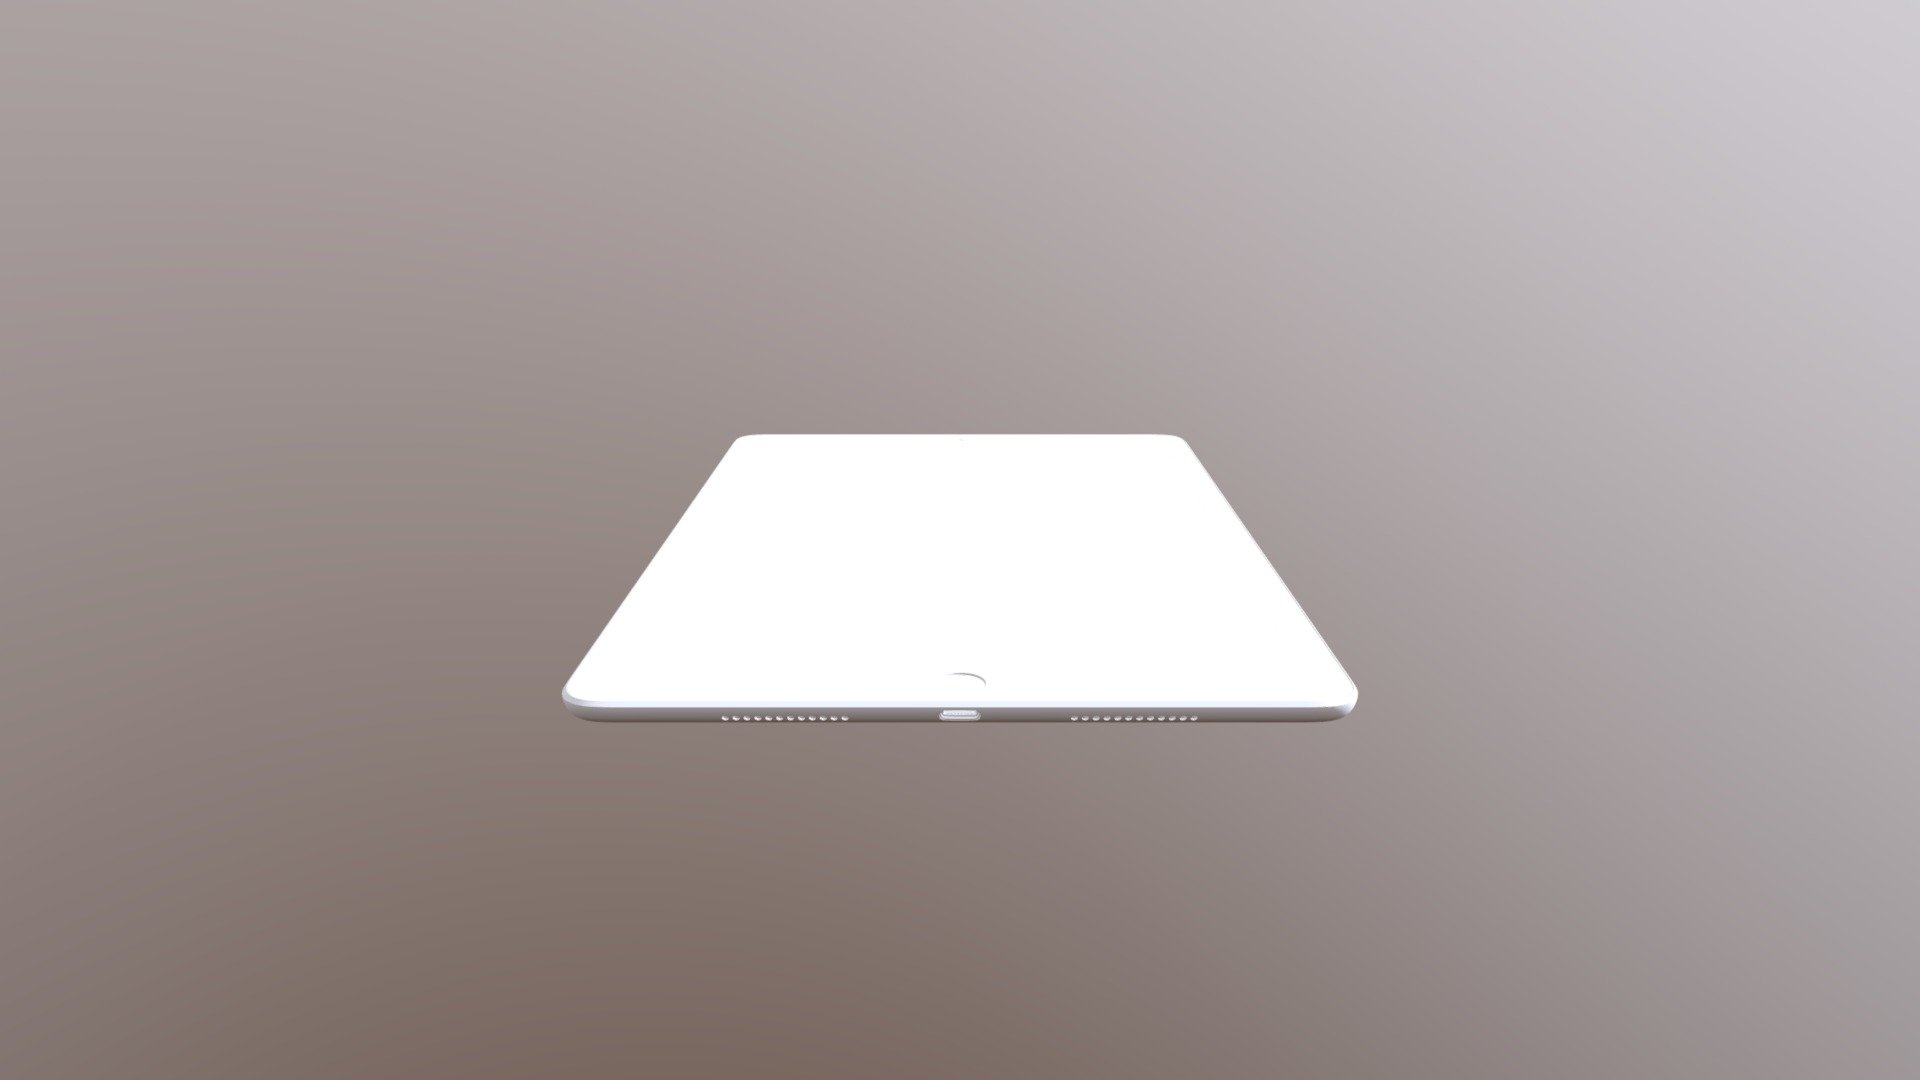 iPad Pro (9.7-inch) - original Apple dimensions